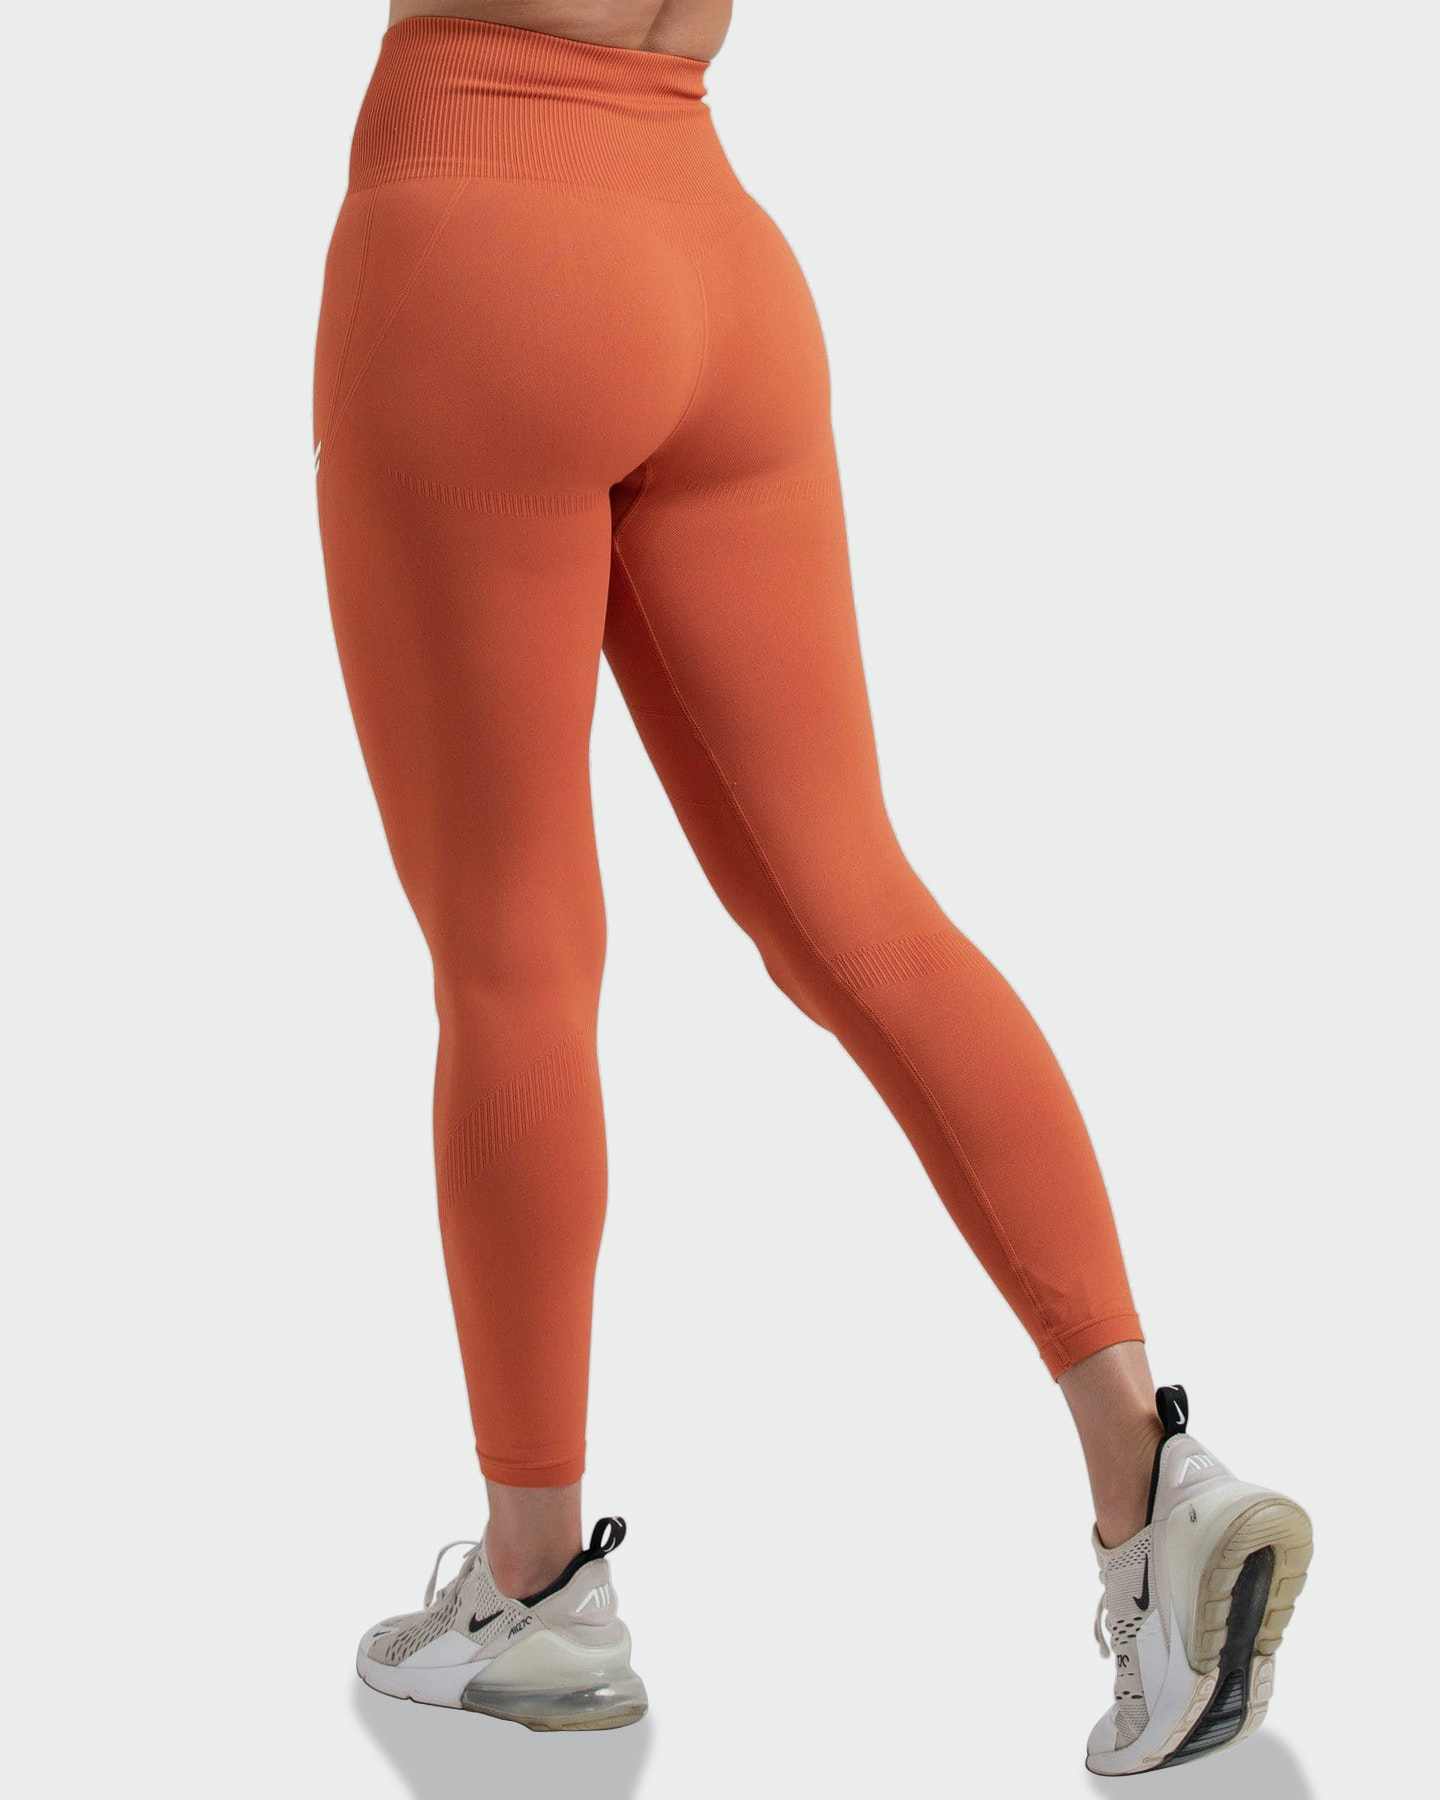 Travel Circumference Encommium orange yoga pants Therefore Performance bowl